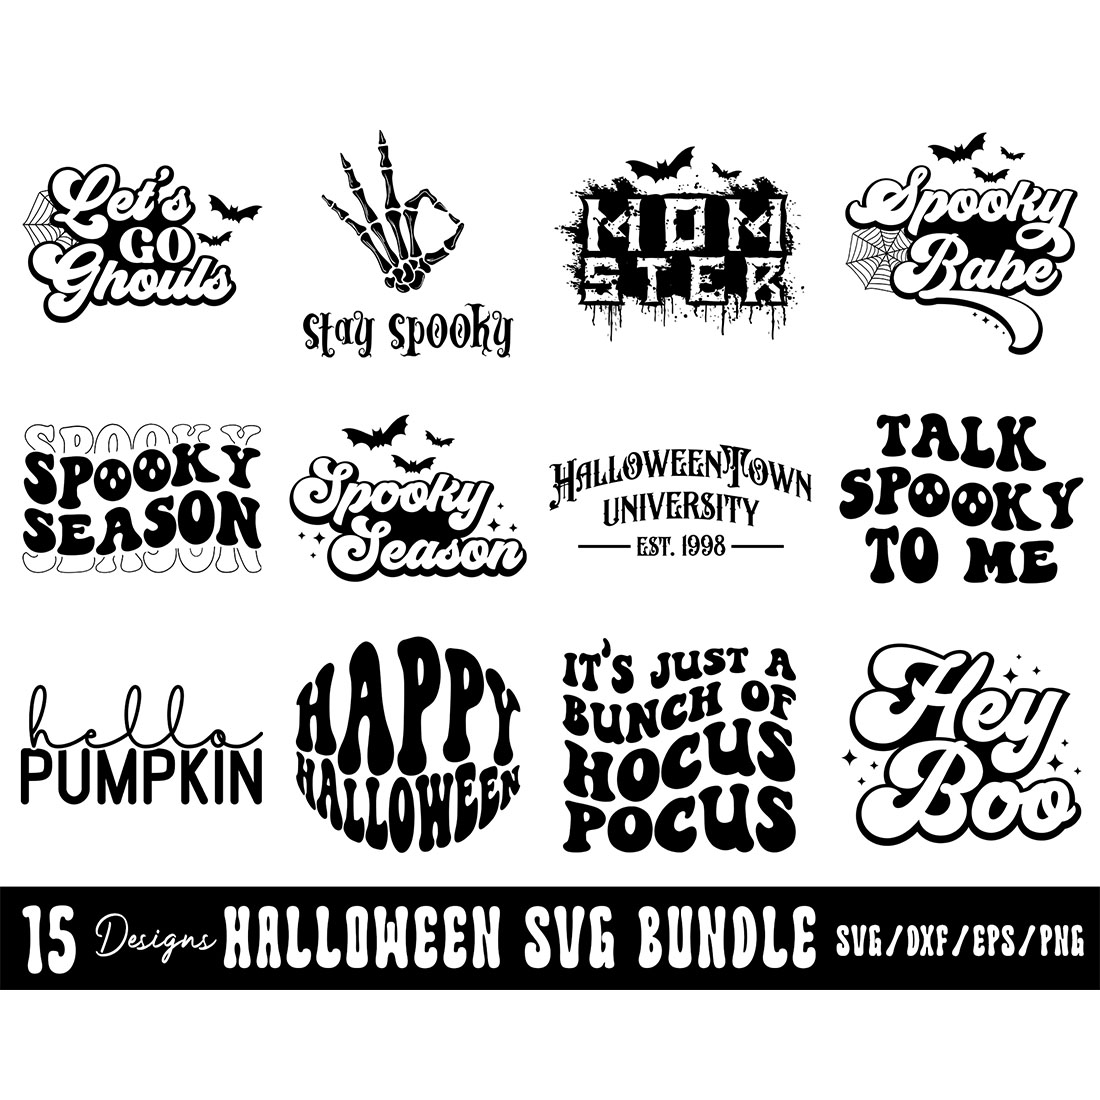 Halloween SVG bundle cover image.